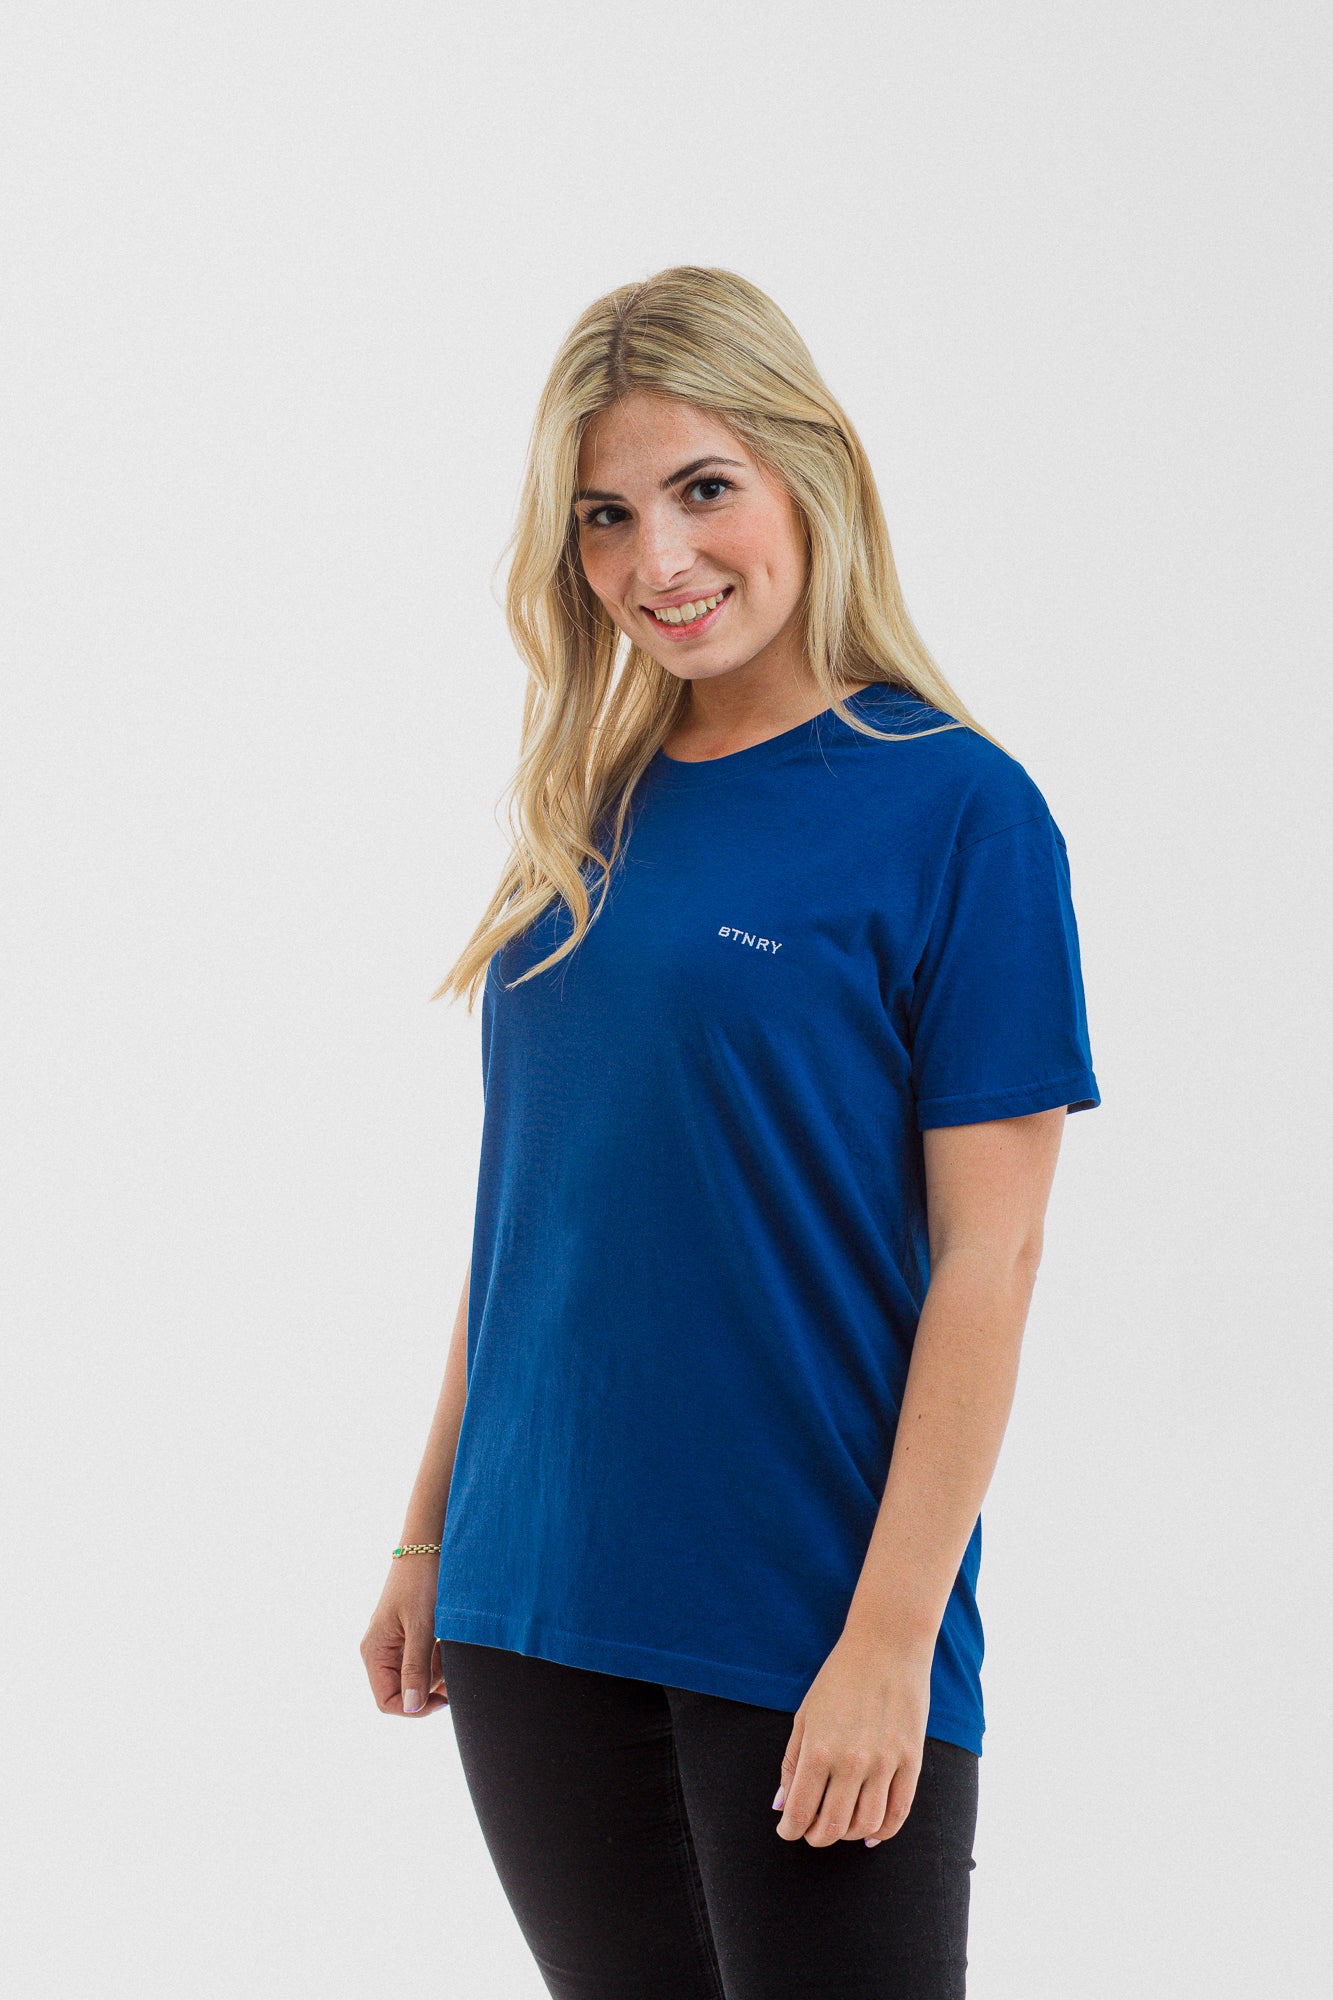 Camiseta Surf Azul Real